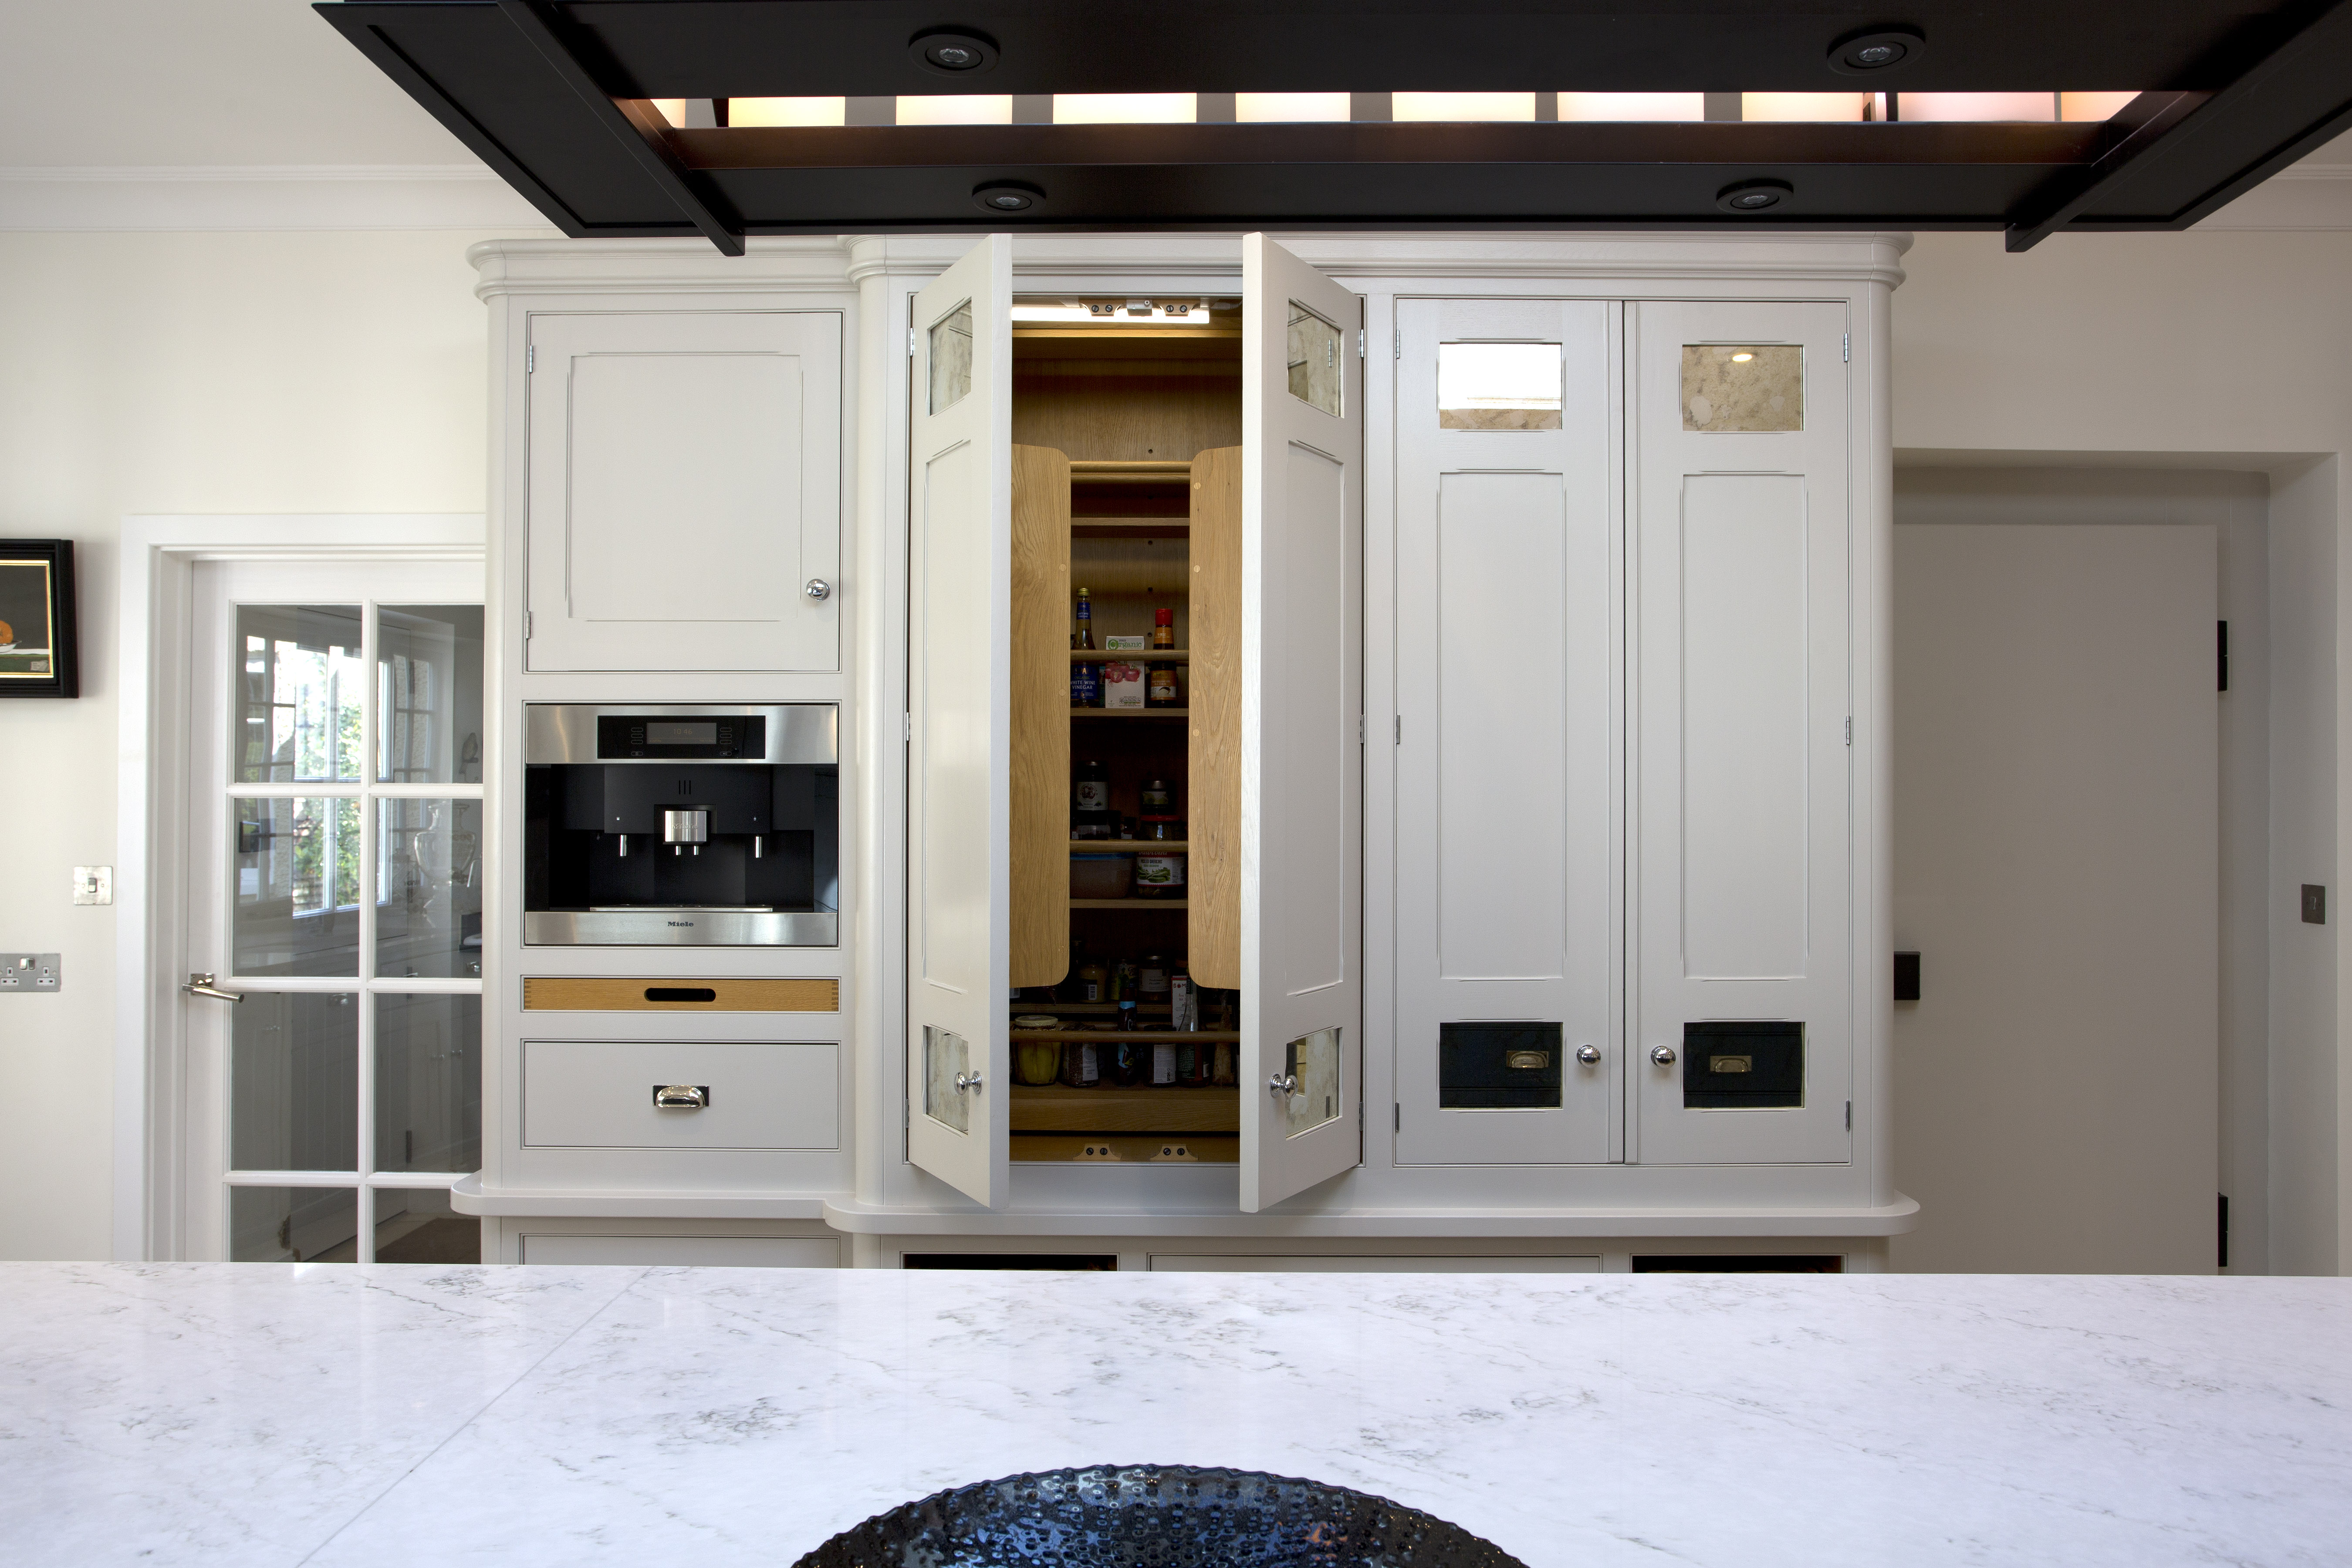 Design Trend: The Super Kitchen - The Cabinet Store + Culina Design and  Culina Design